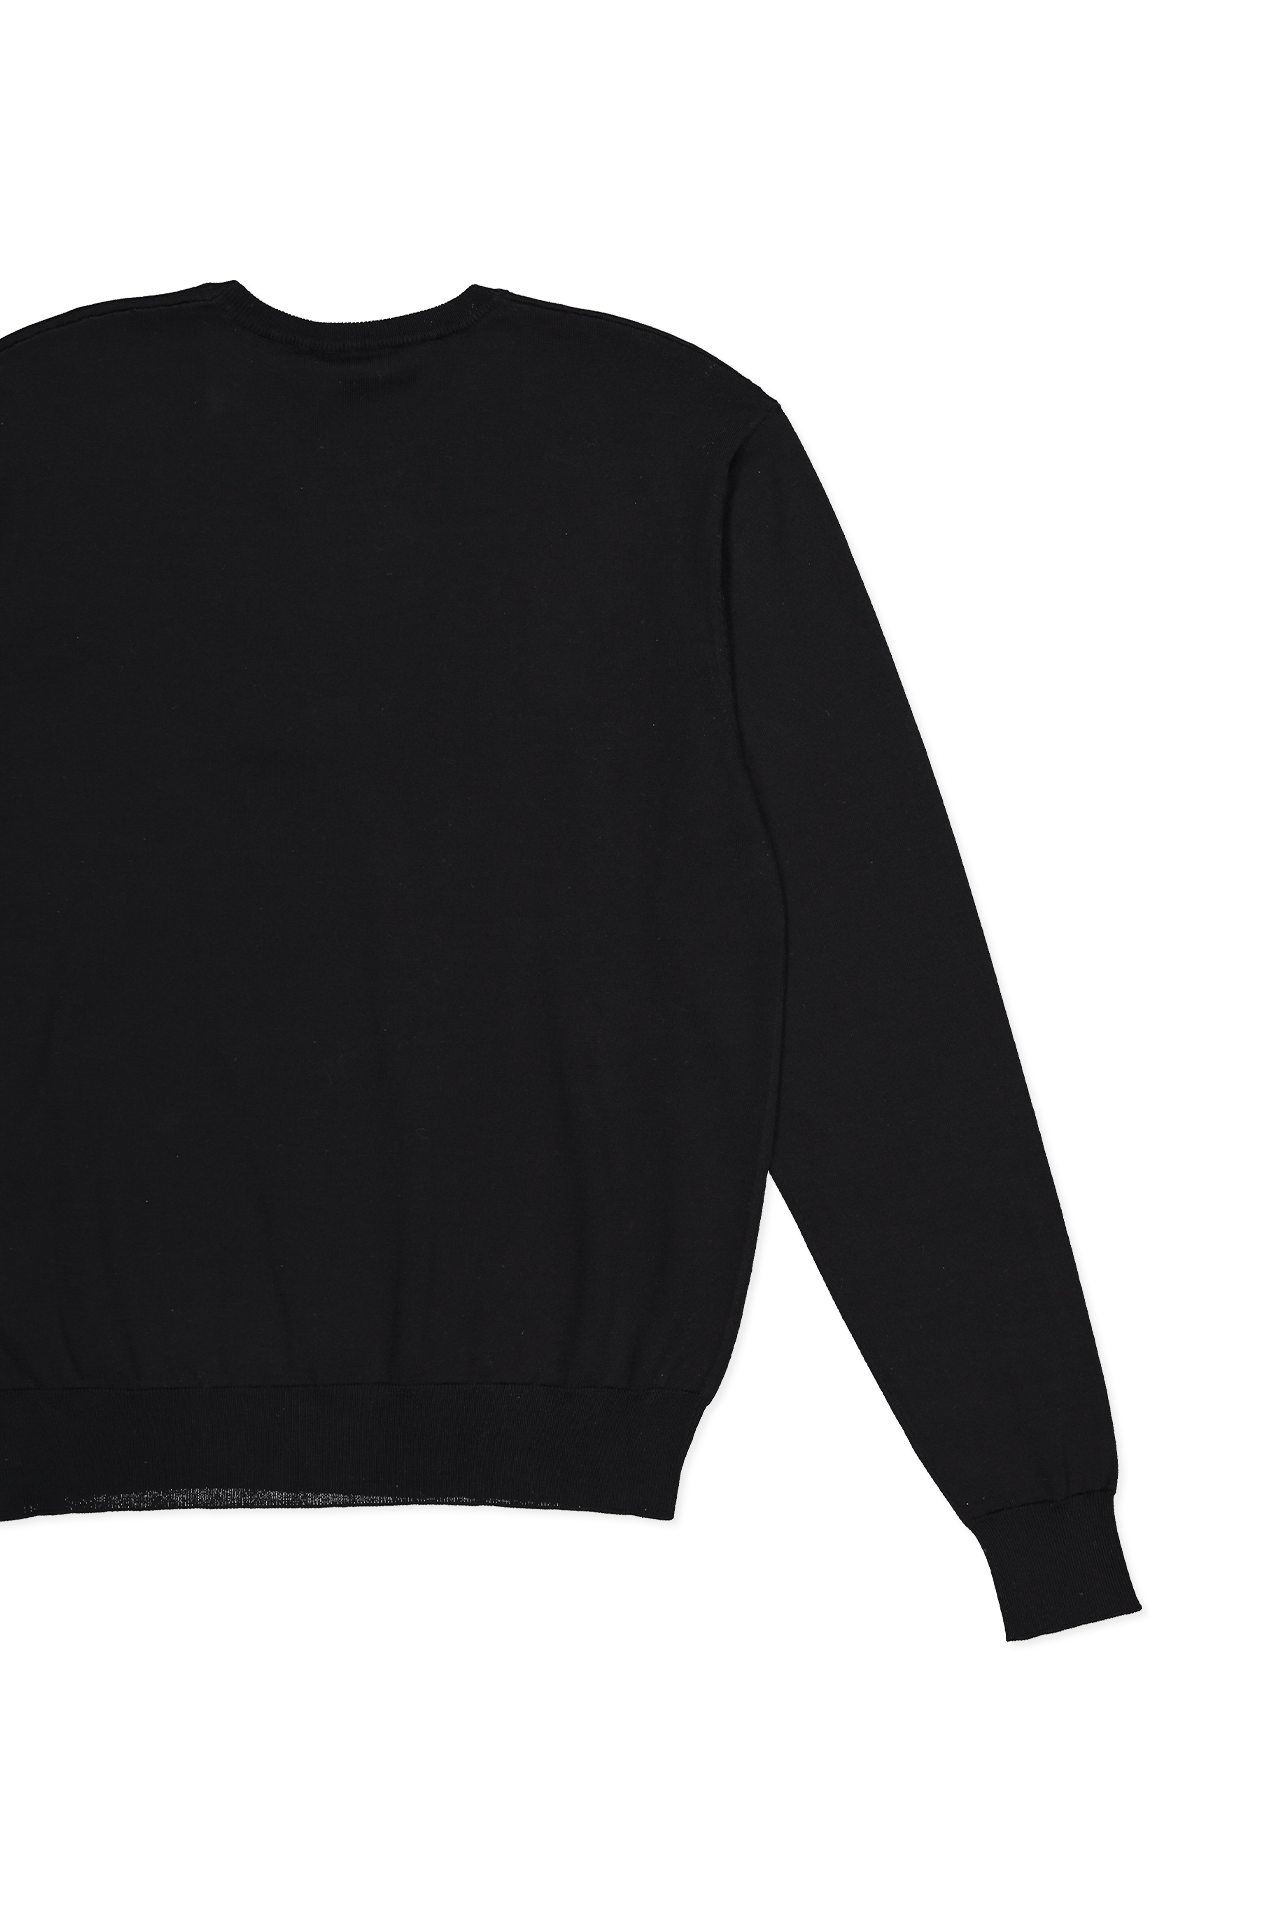 12 GG Cotton Jersey Sweater (7157378220147)